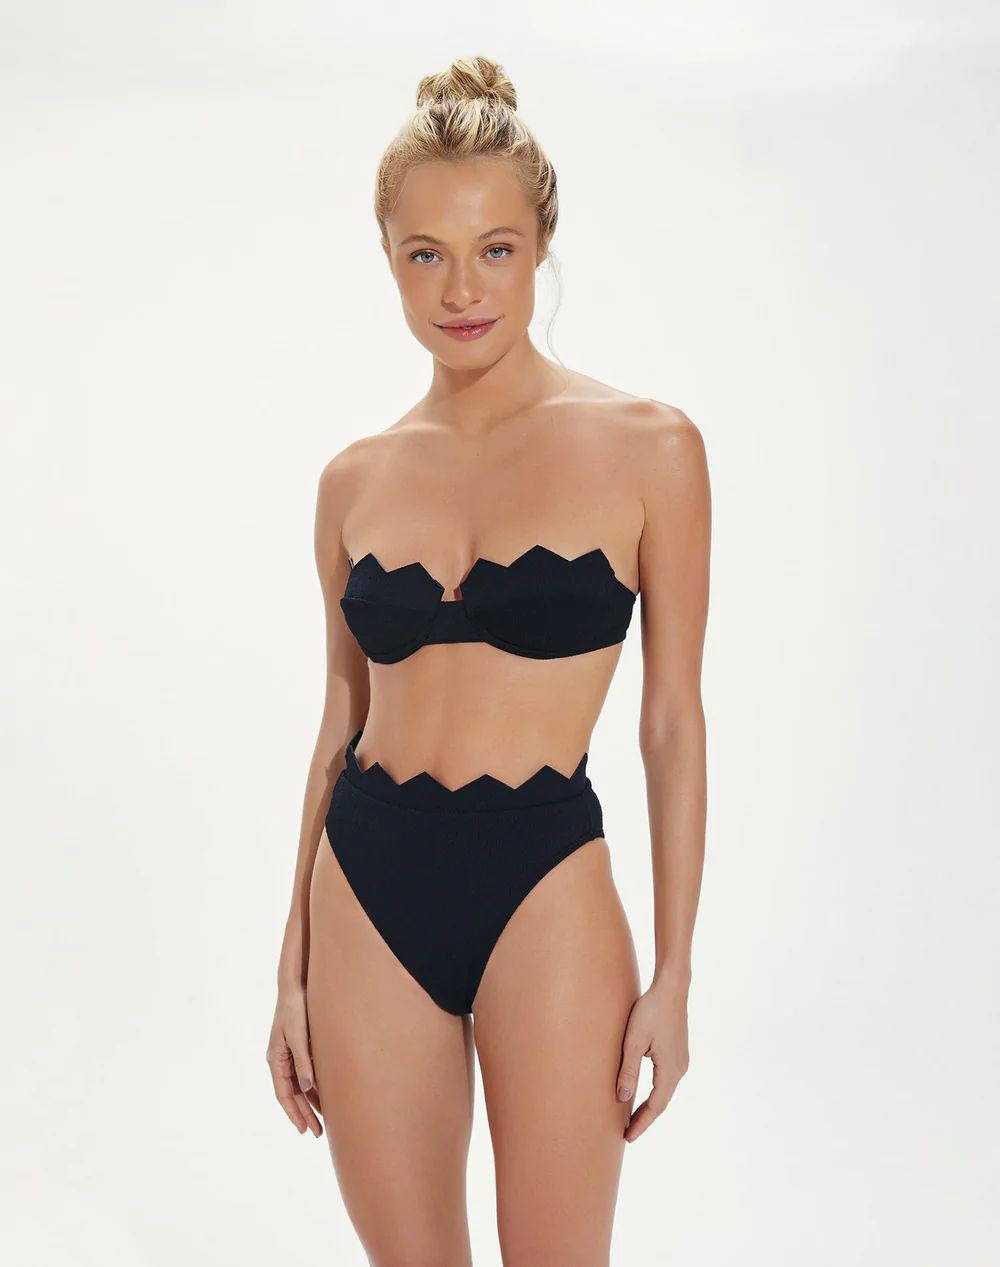 Firenze Imani Bandeau Top - Black | ViX Swimwear